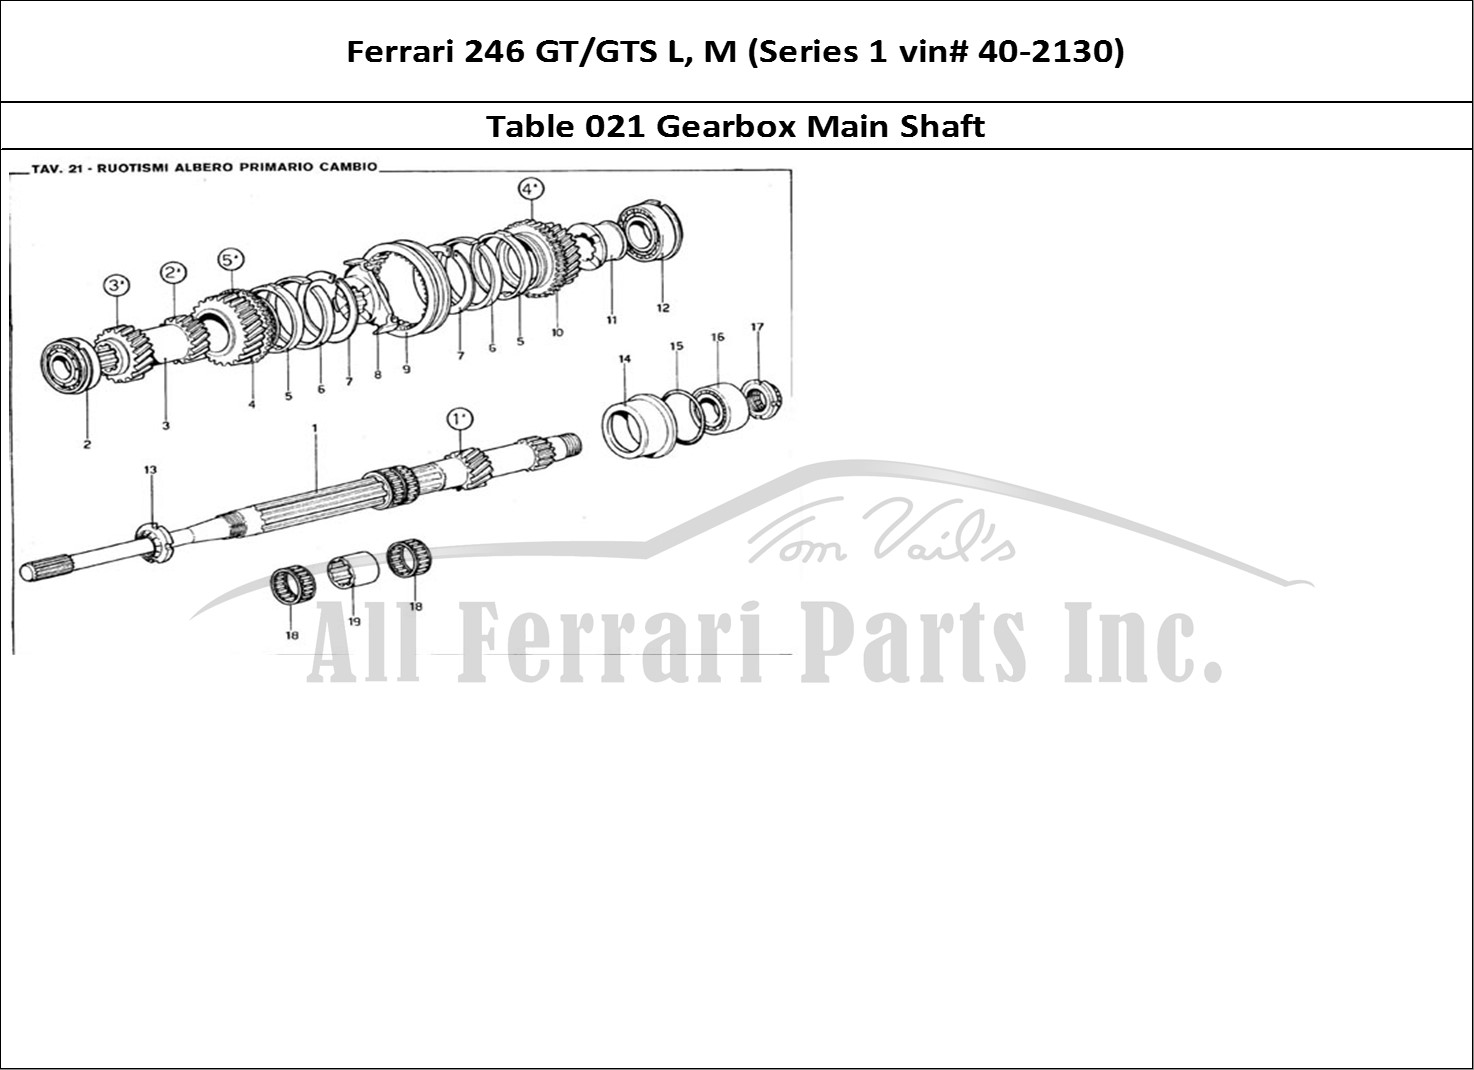 Ferrari Parts Ferrari 246 GT Series 1 Page 021 Main Shaft Gearing